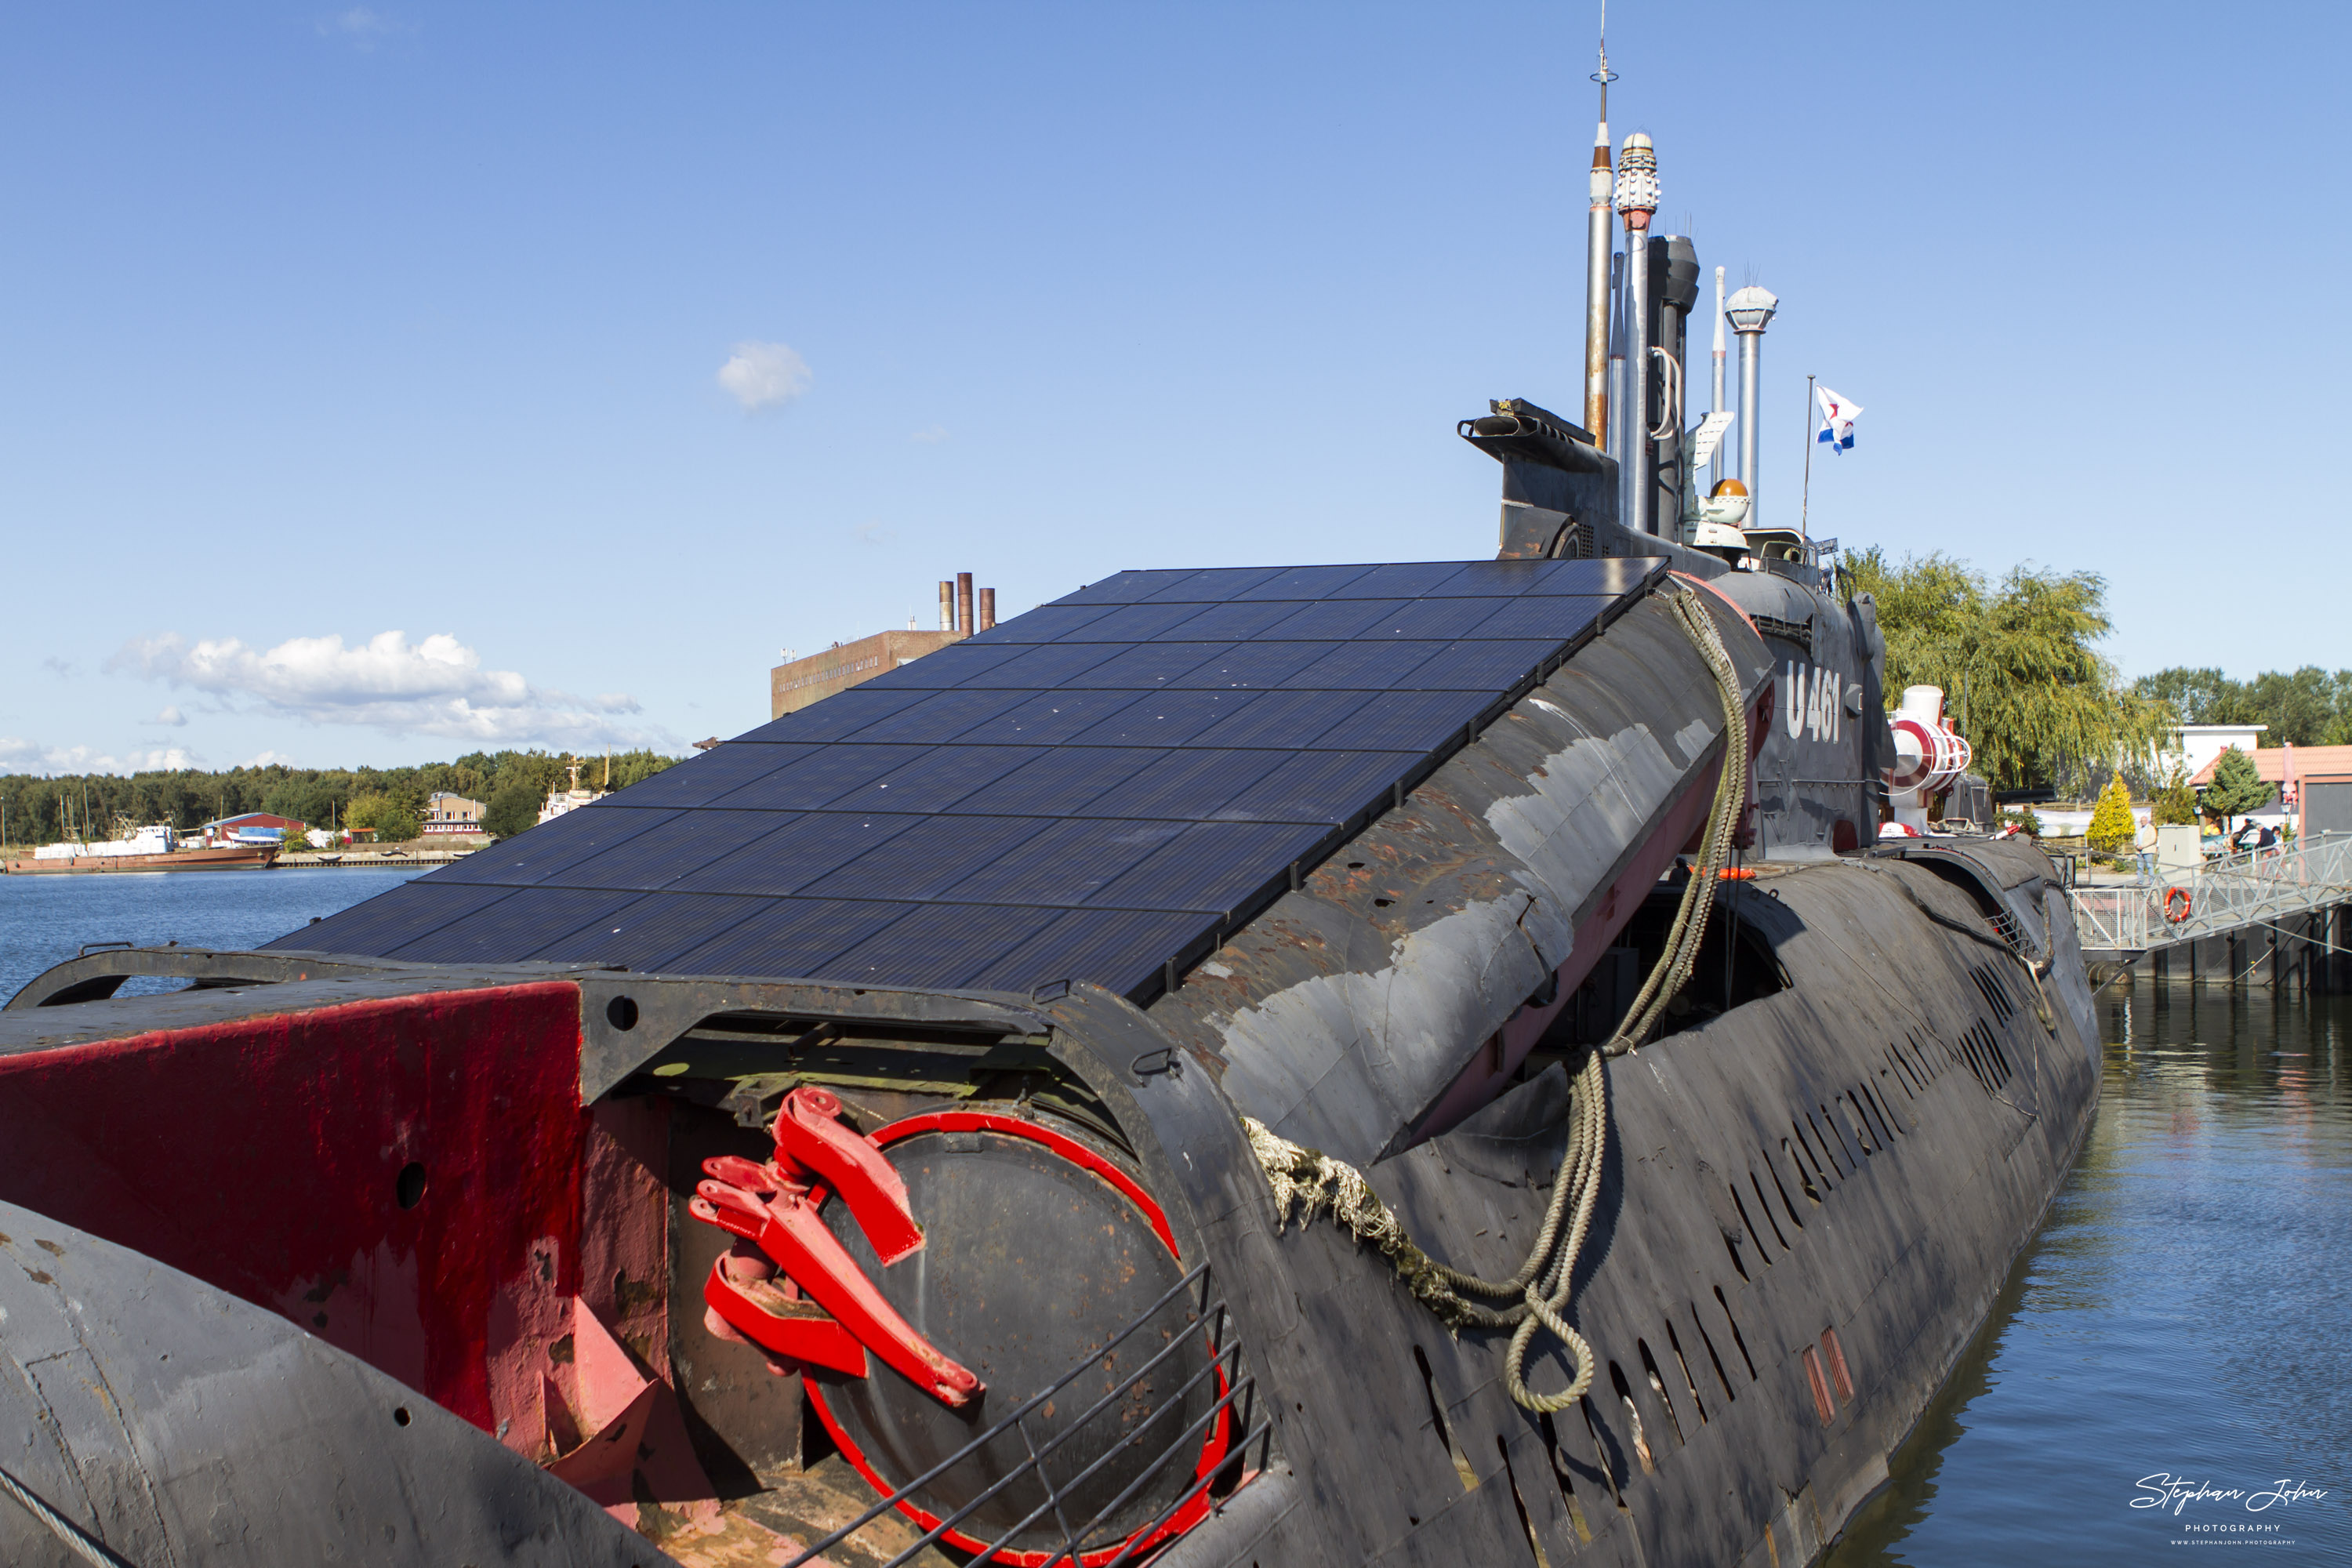 Das ehemalige russisches U-Boot U 461 in Peenemünde dient heute als Museum.